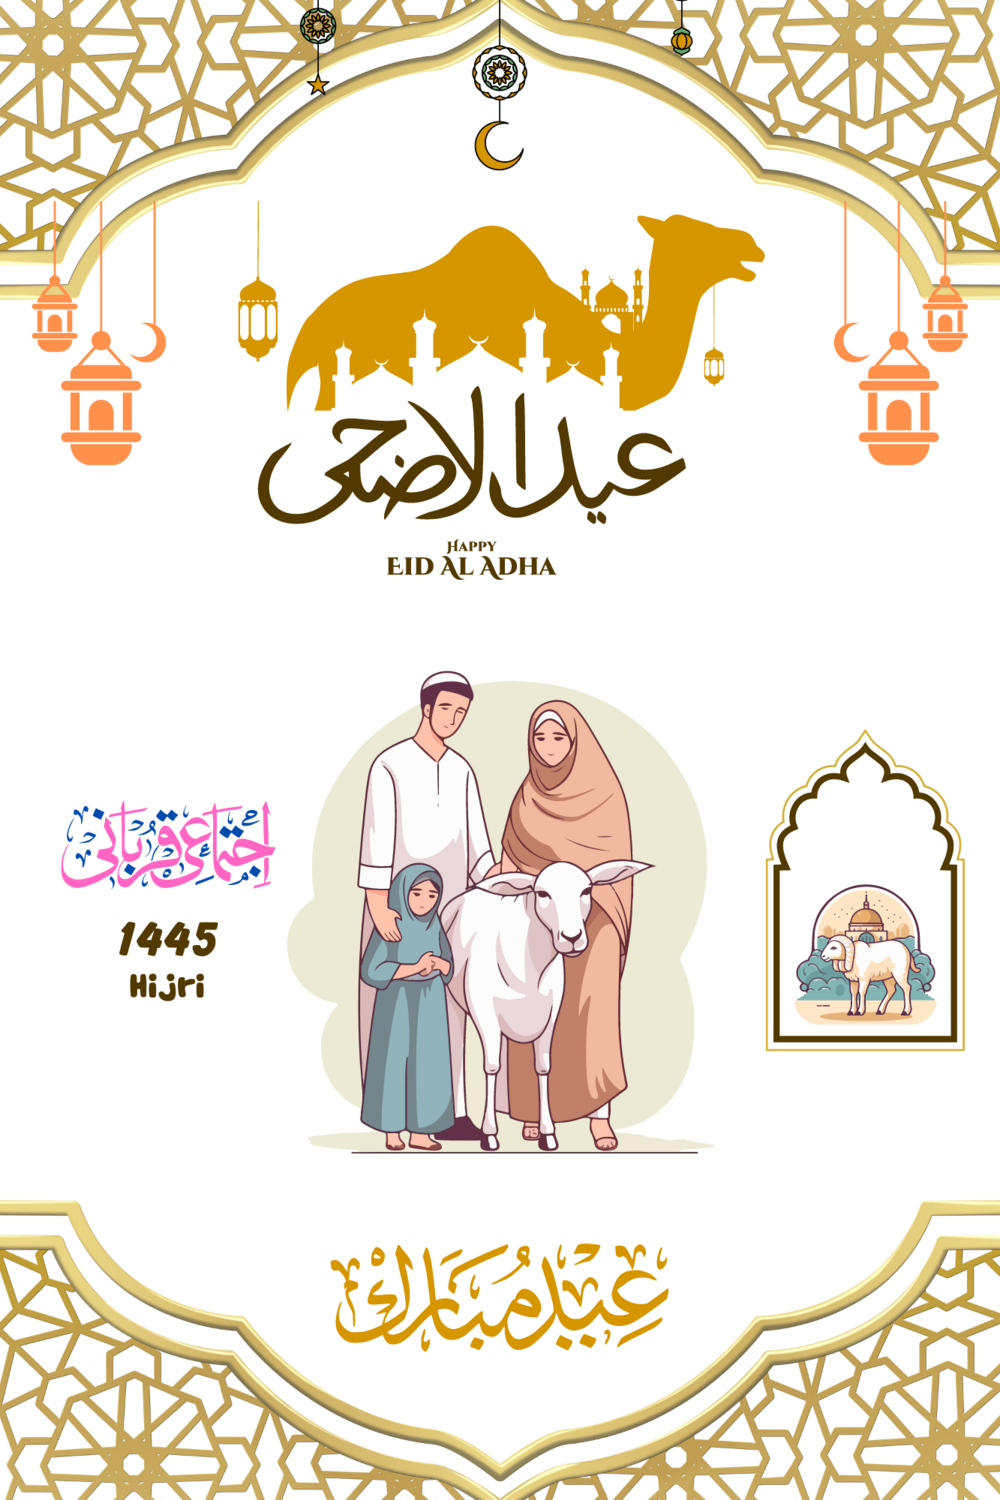 Printable Eid-al- adha Mubarak Design for Sale pinterest preview image.